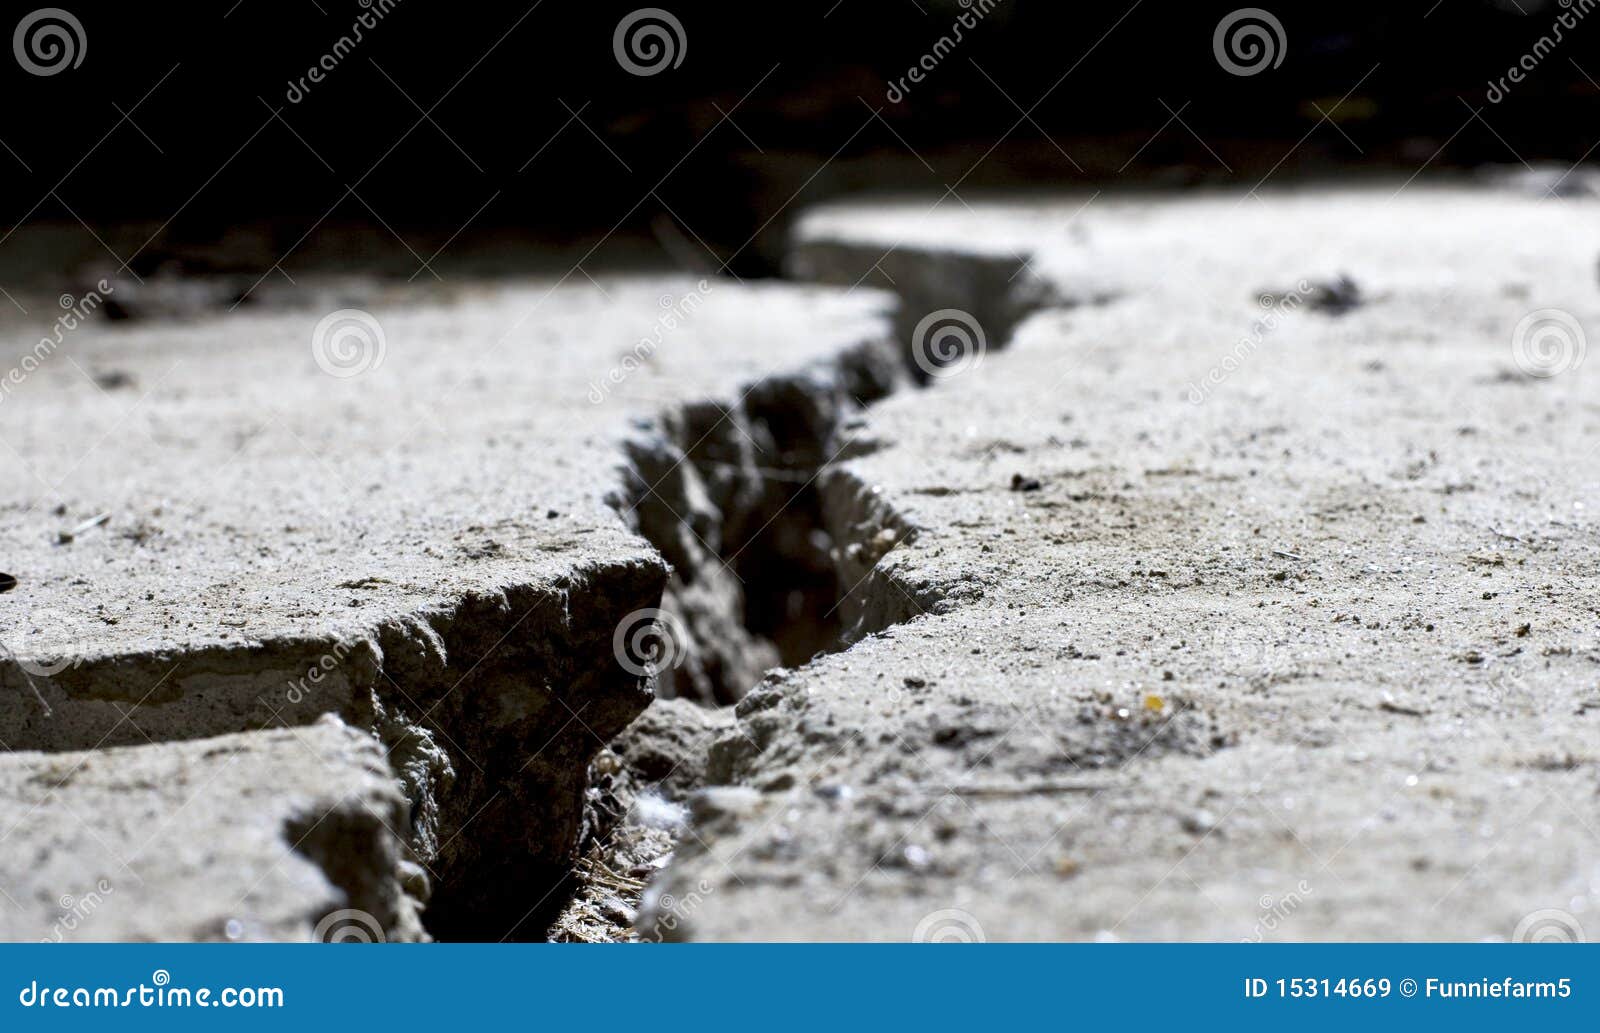 cracked concrete close up